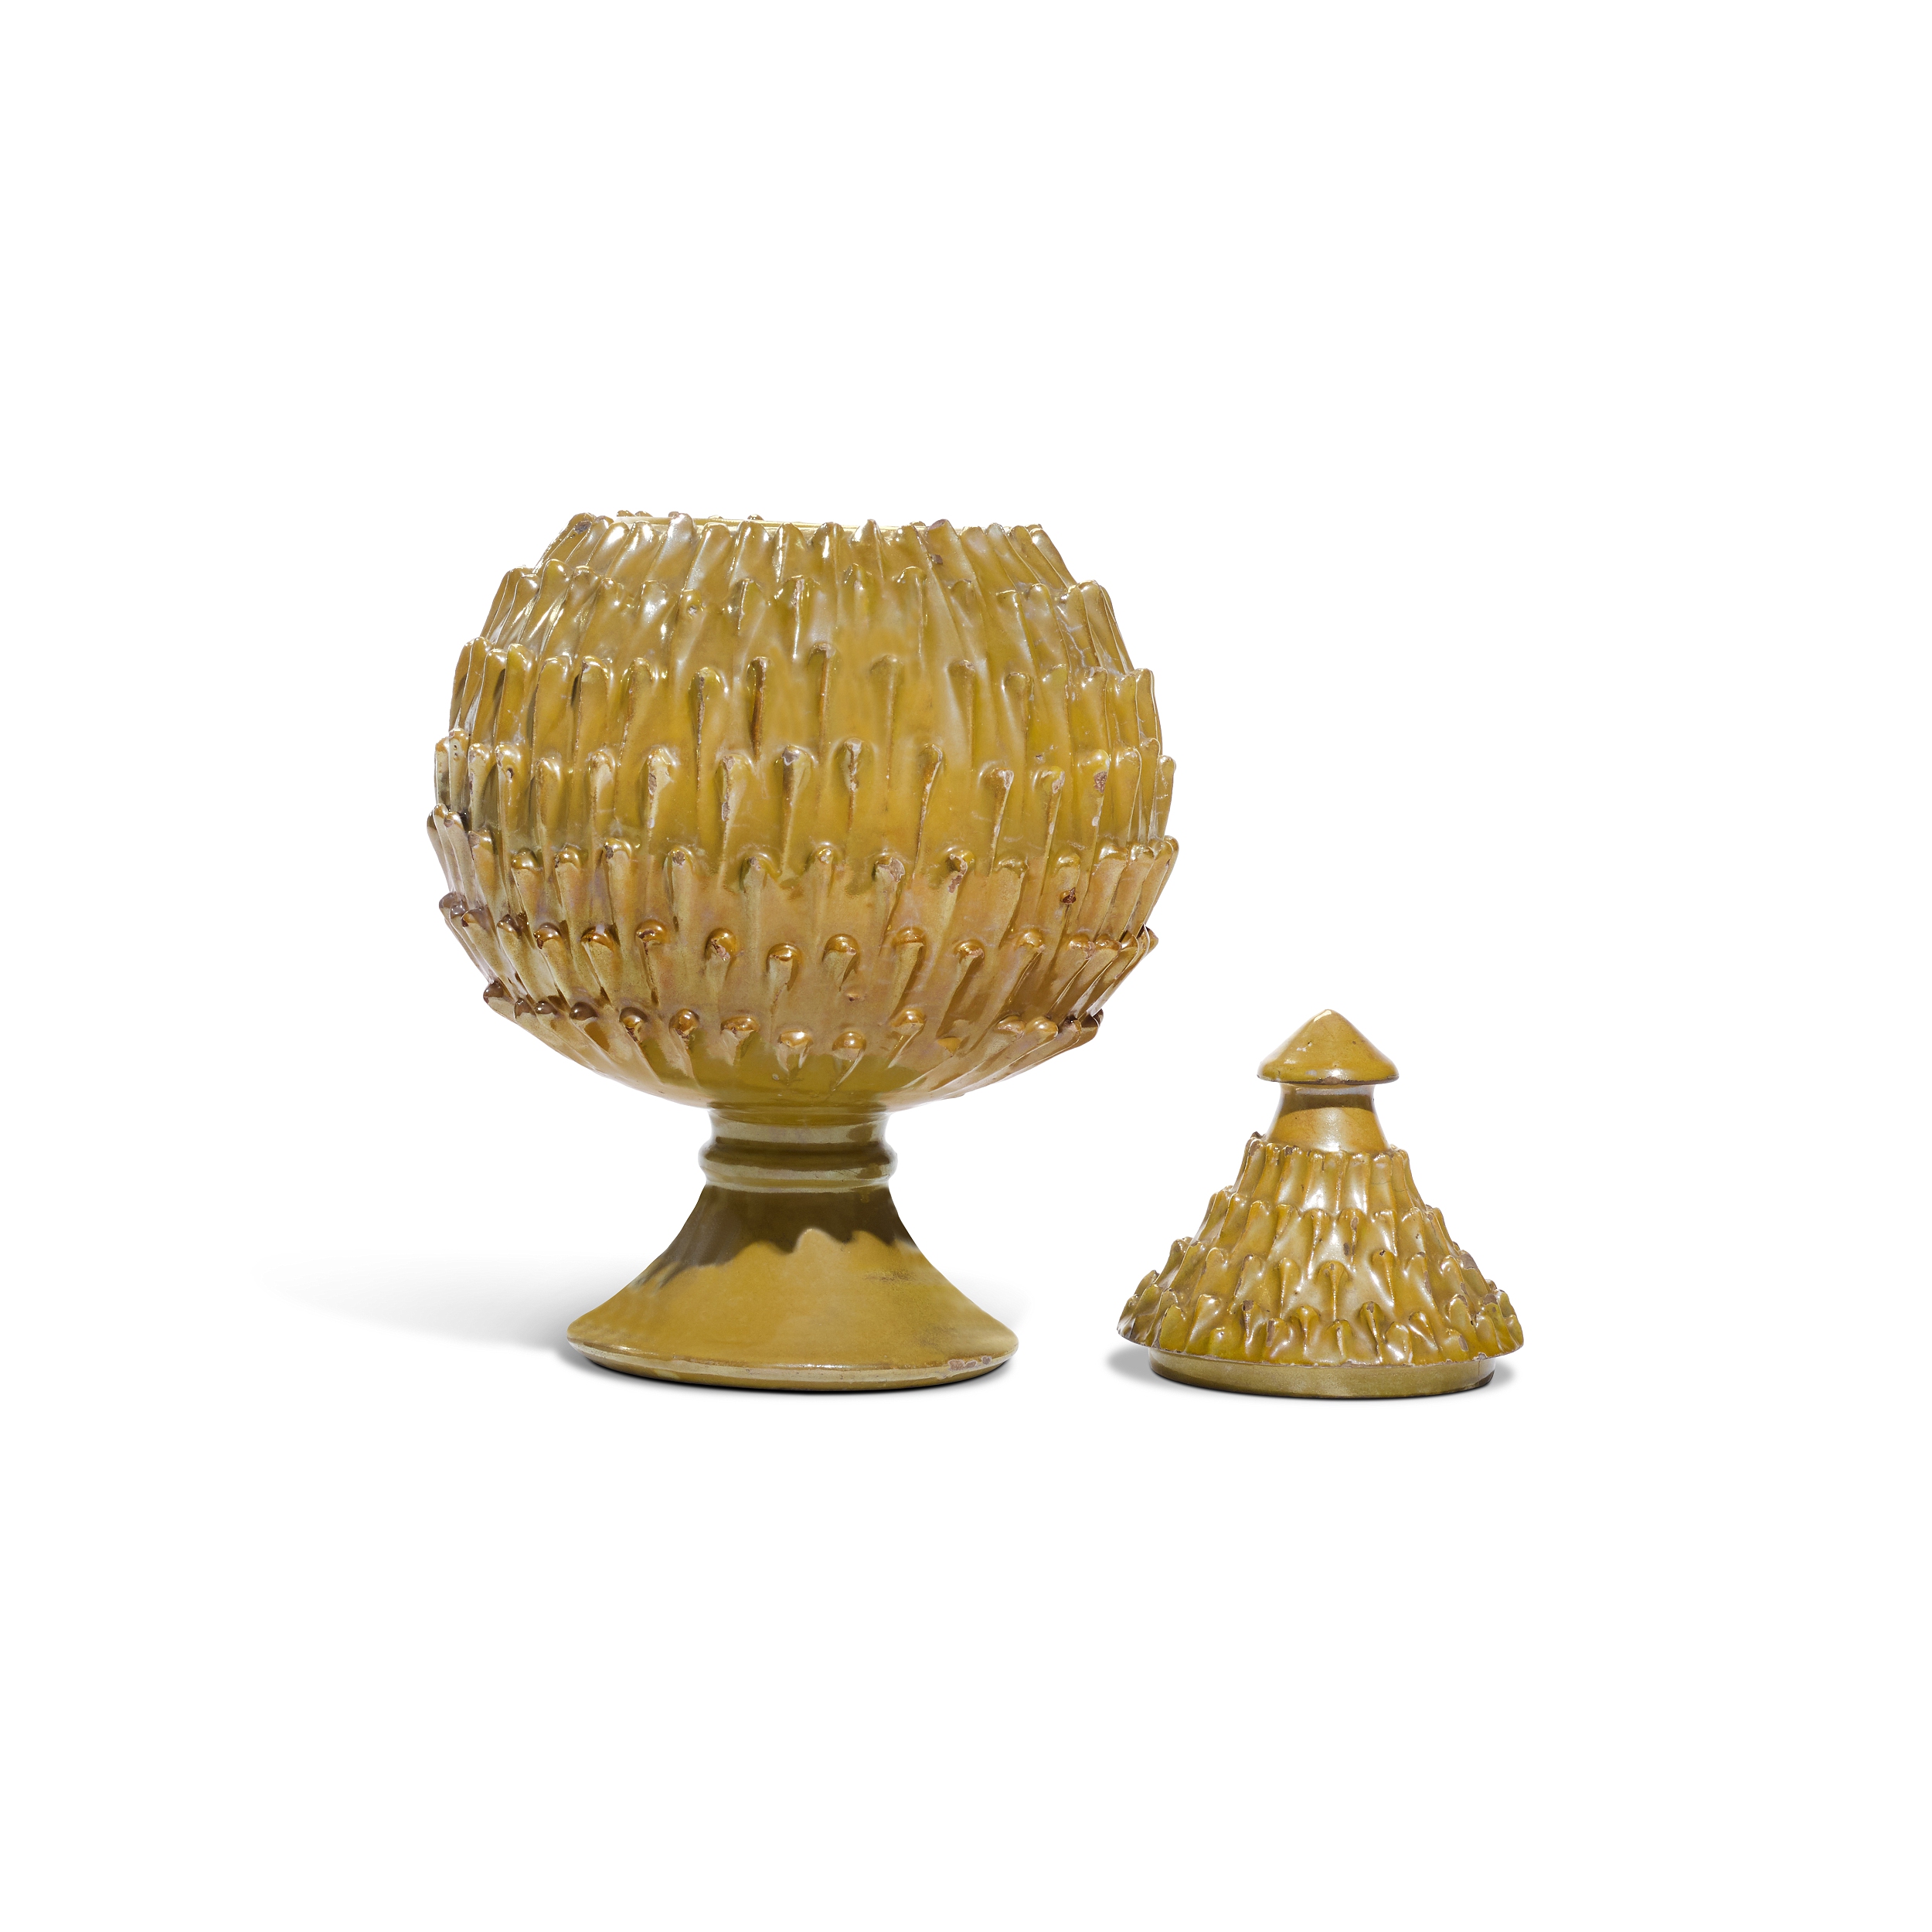 A Deruta maiolica gold lustre pinecone jar and cover, circa 1525 - Image 2 of 3